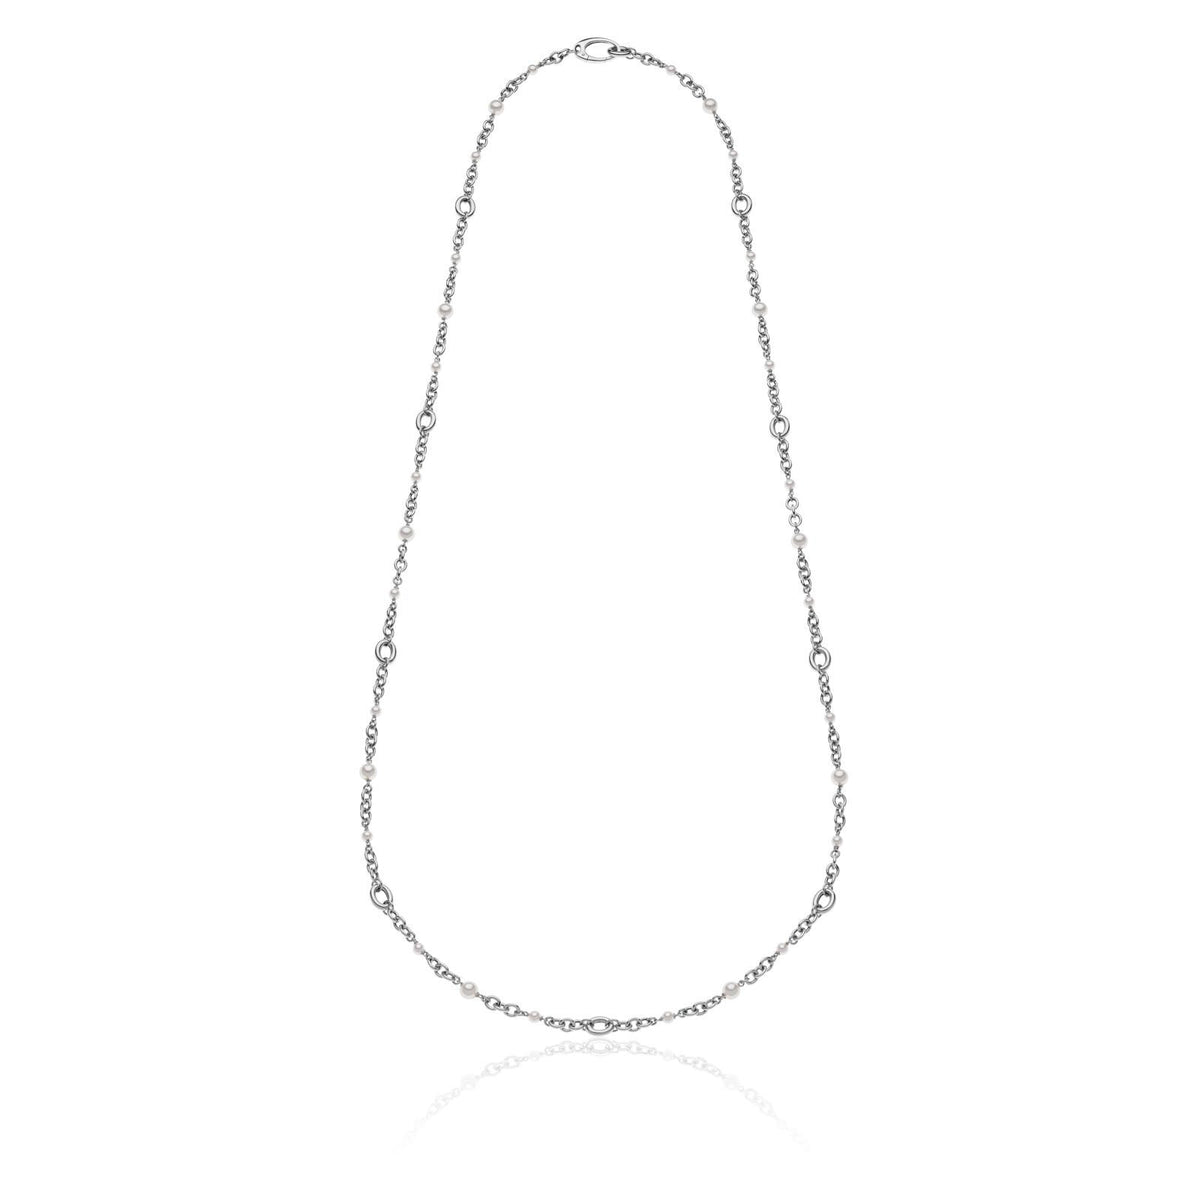 Collana lunga in argento con perle bianche Unoaerre 724YHW3243070 6096